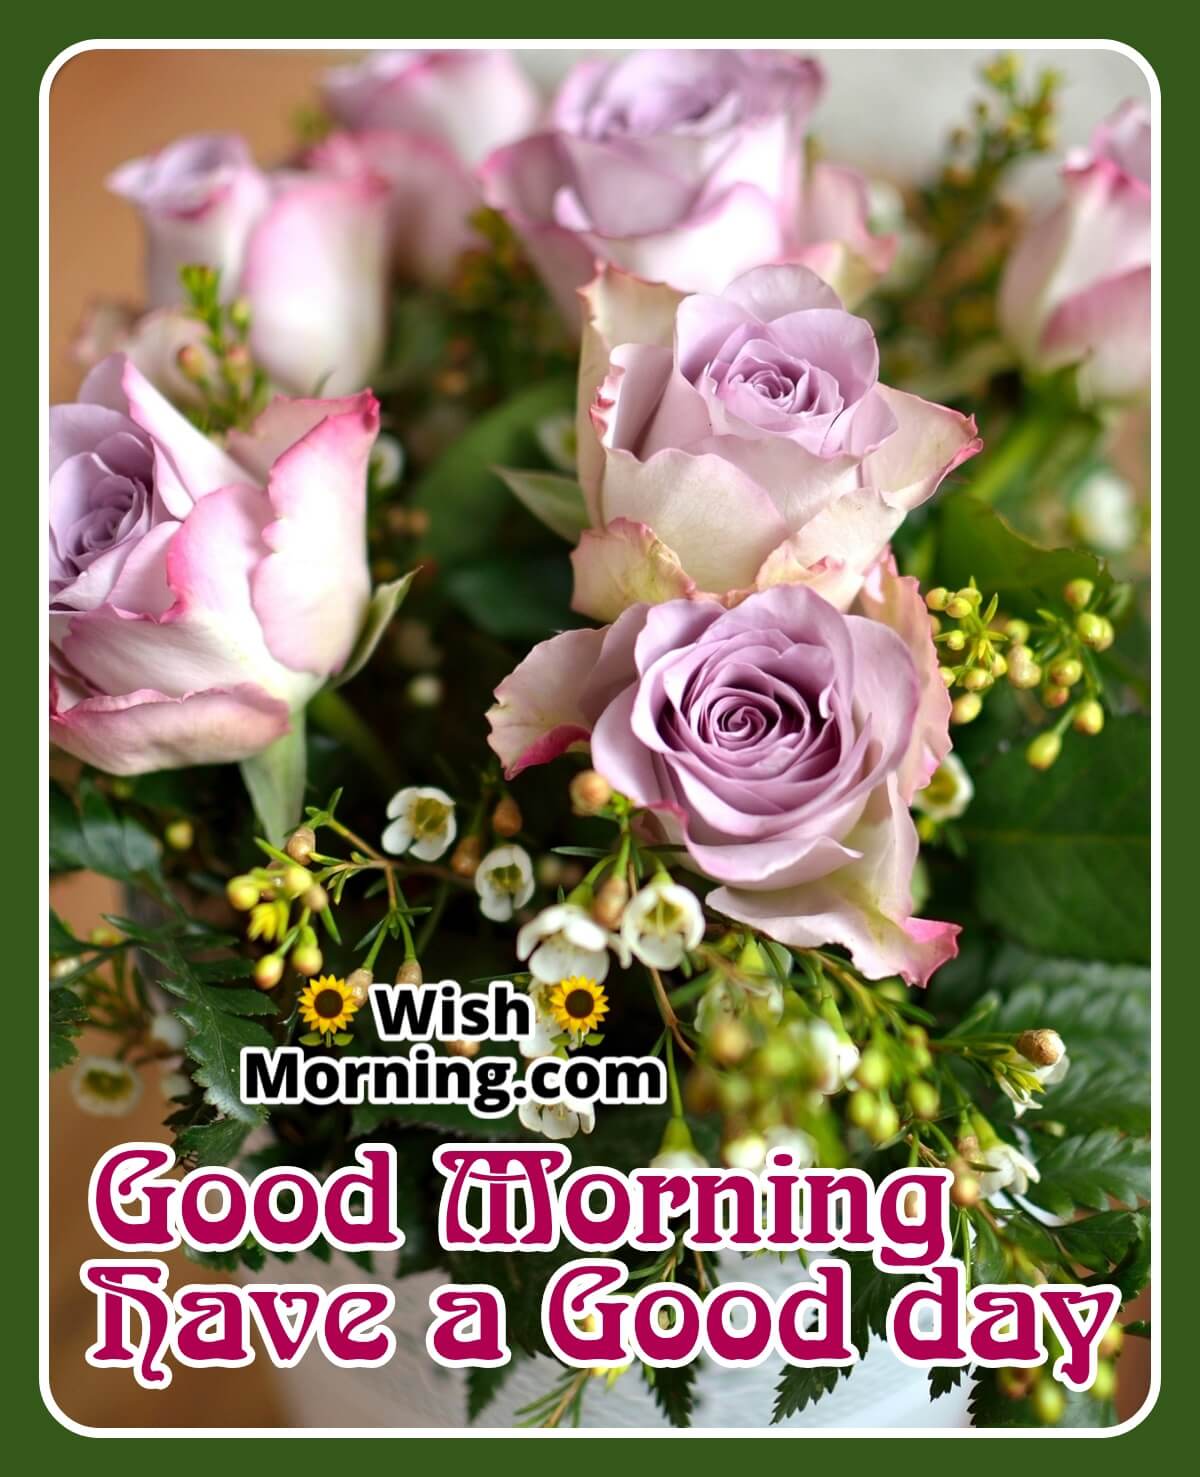 Good Morning Rose Flowers Image